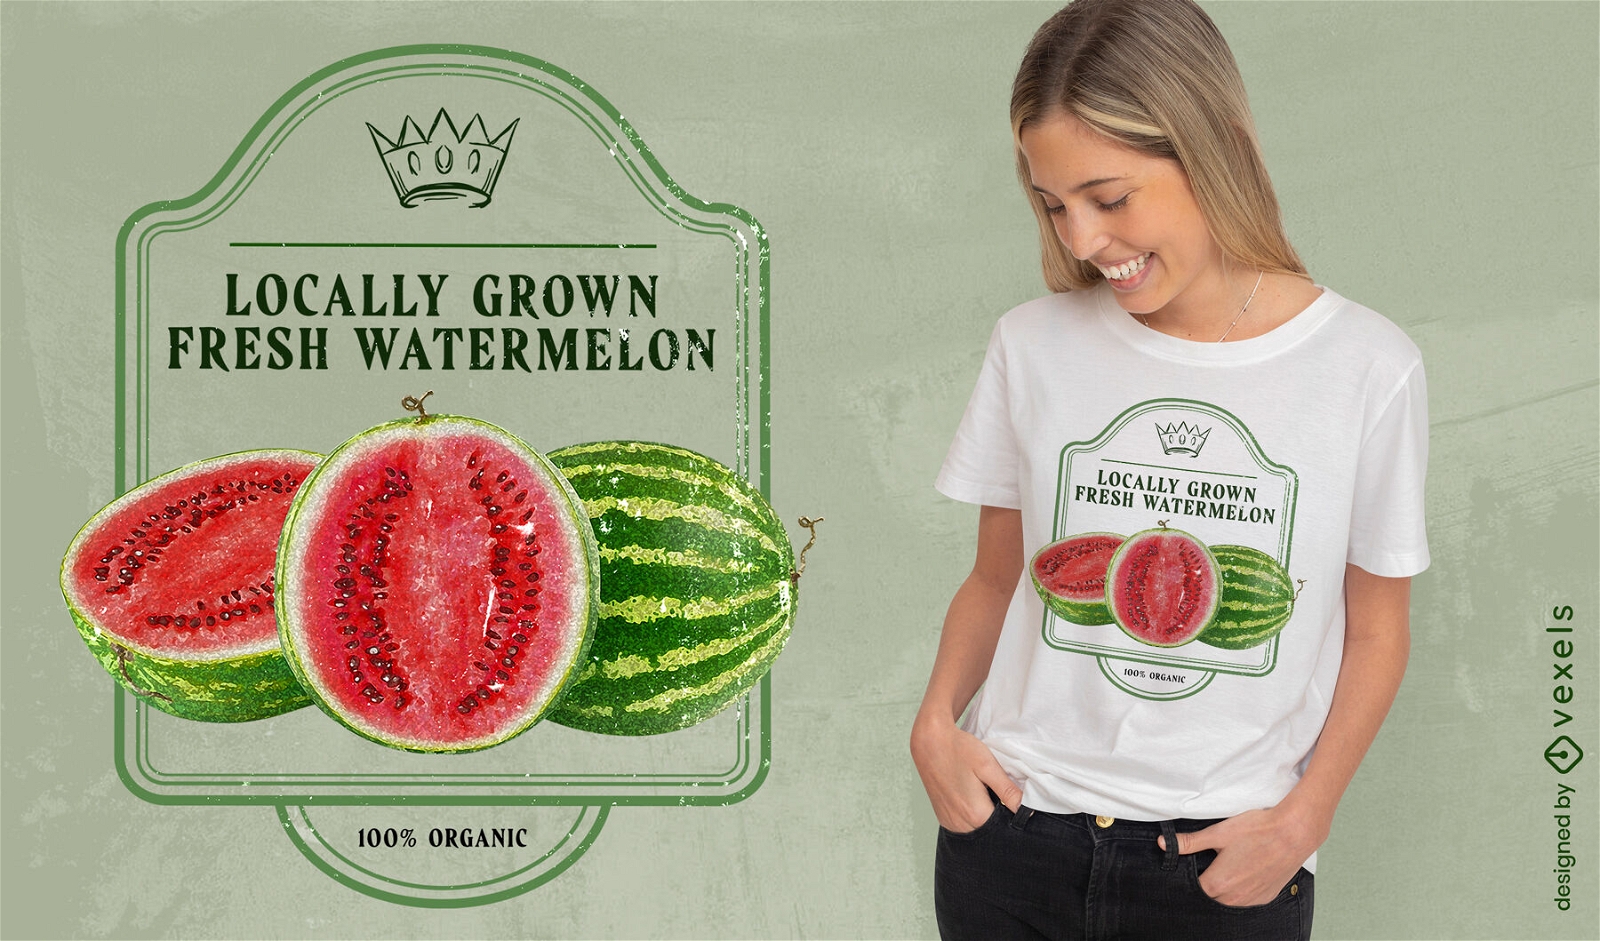 Wassermelone tr?gt Vintages T-Shirt psd Fr?chte